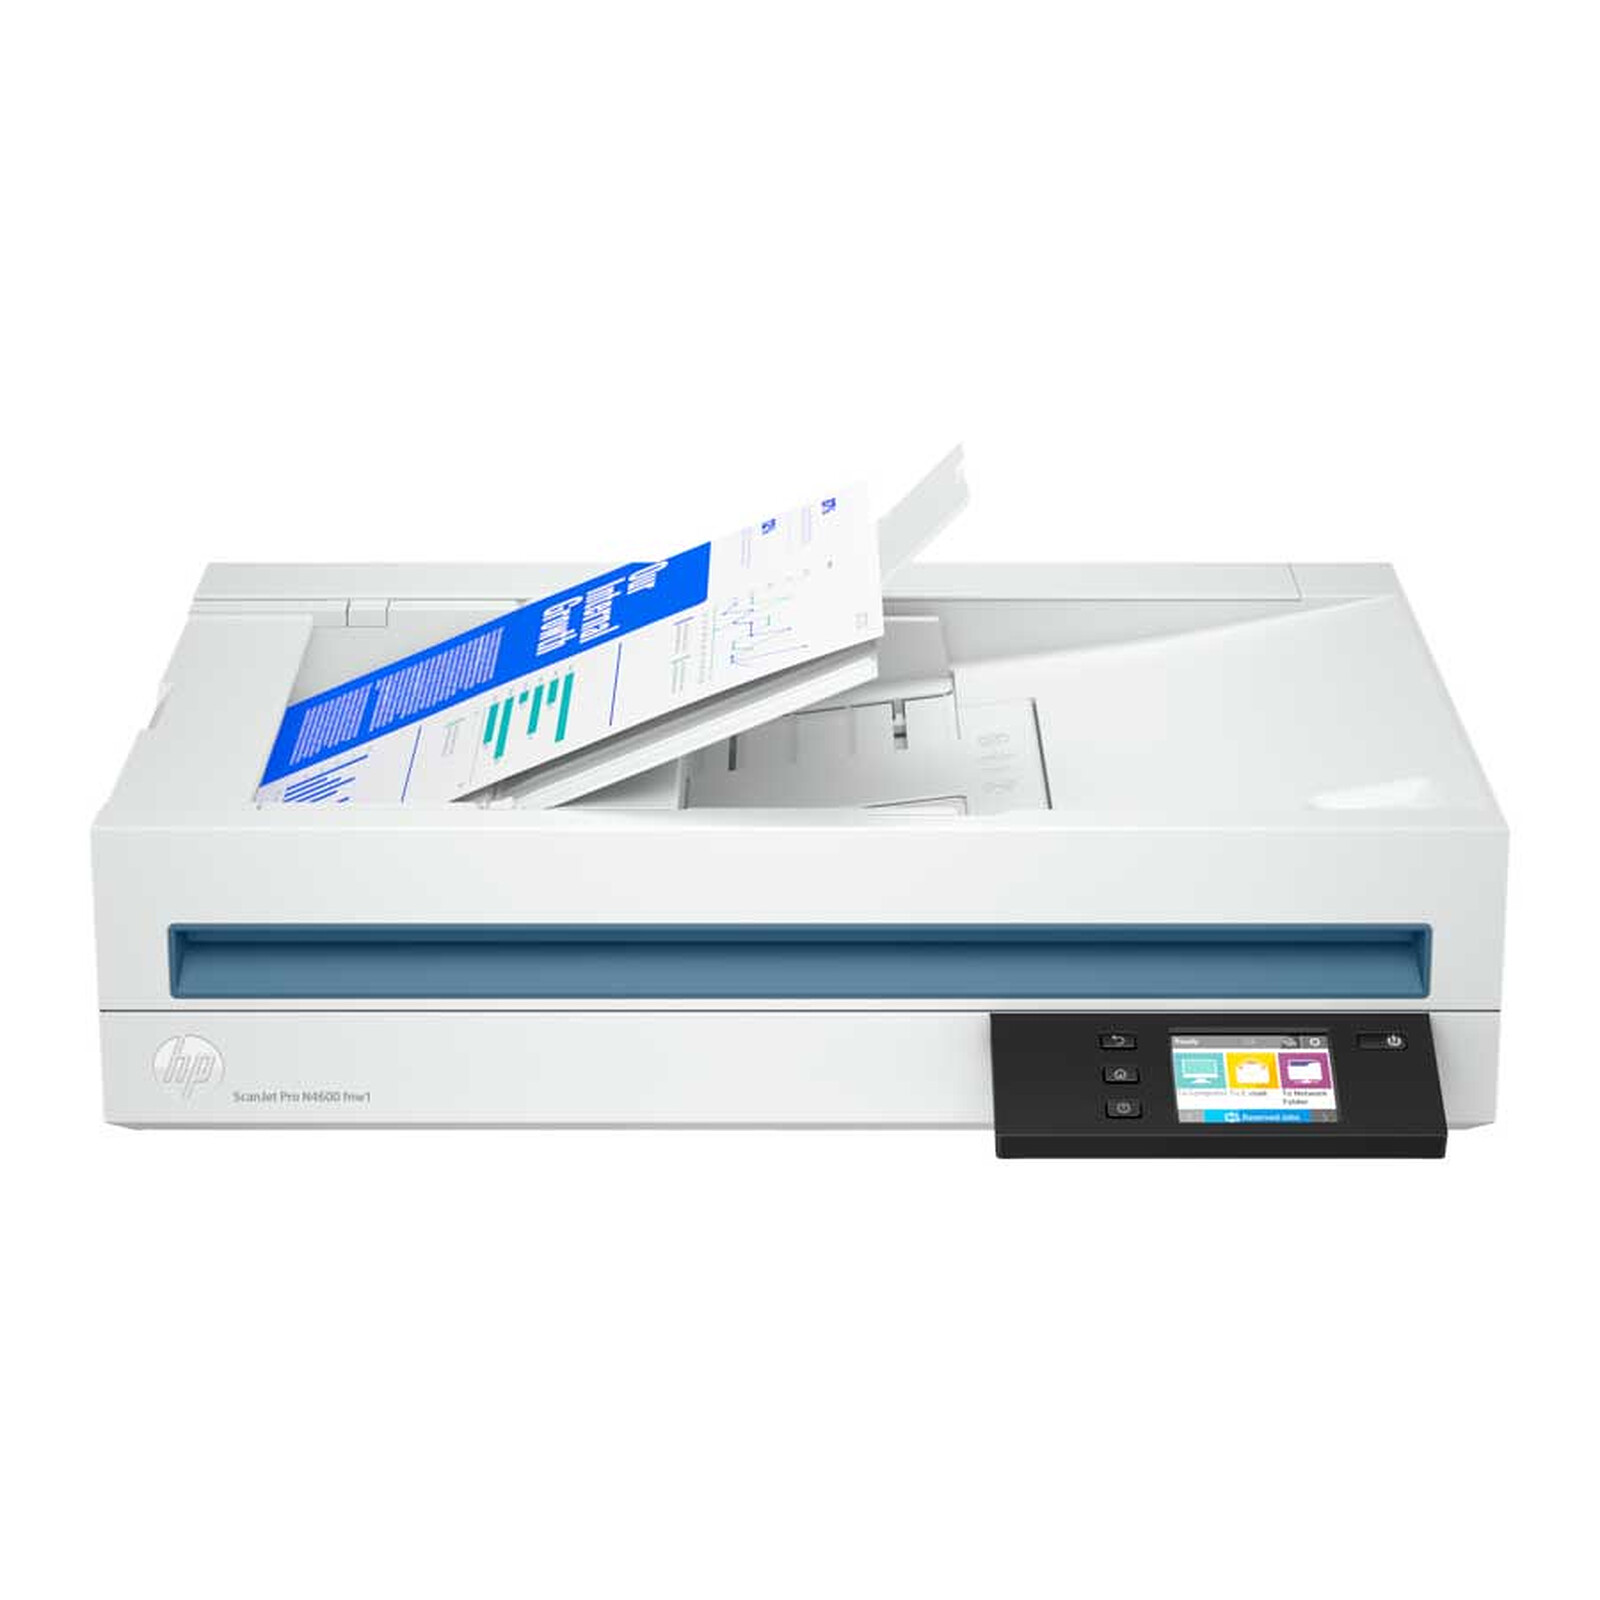 HP ScanJet Pro N4600 fnw1 - Scanner - Garantie 3 ans LDLC